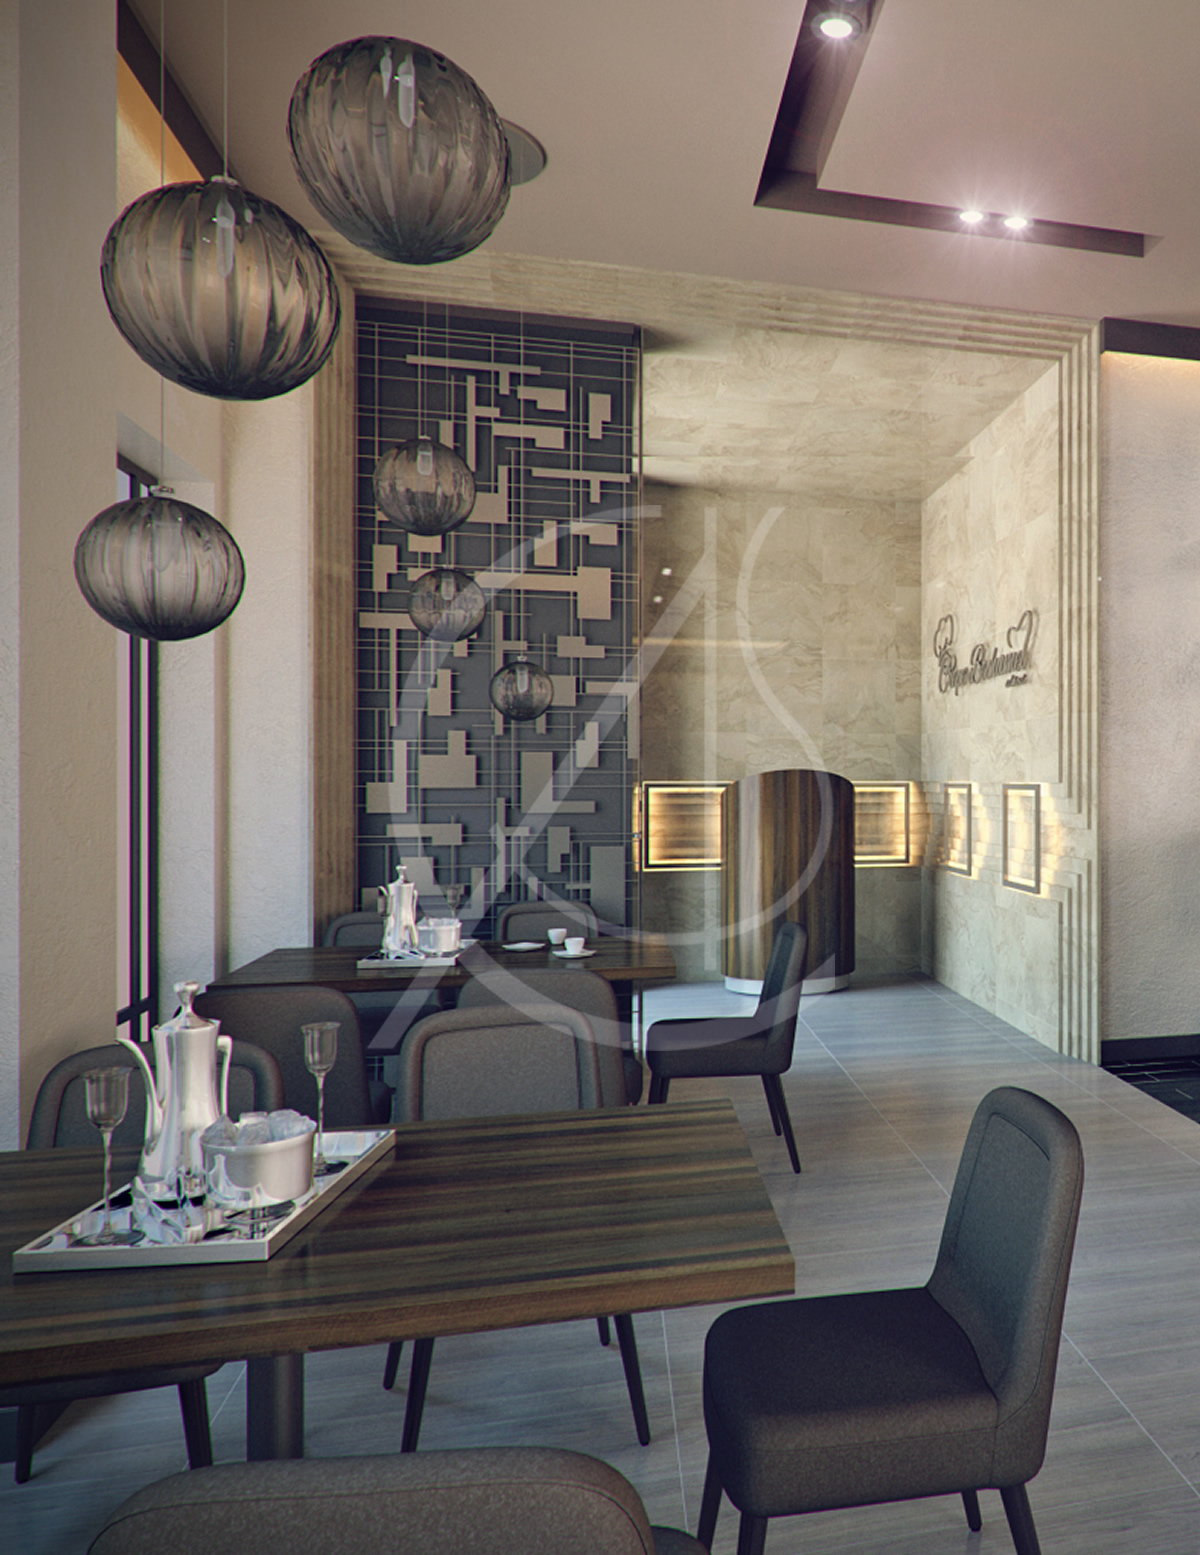 crepe bechamel restaurant interior design-2